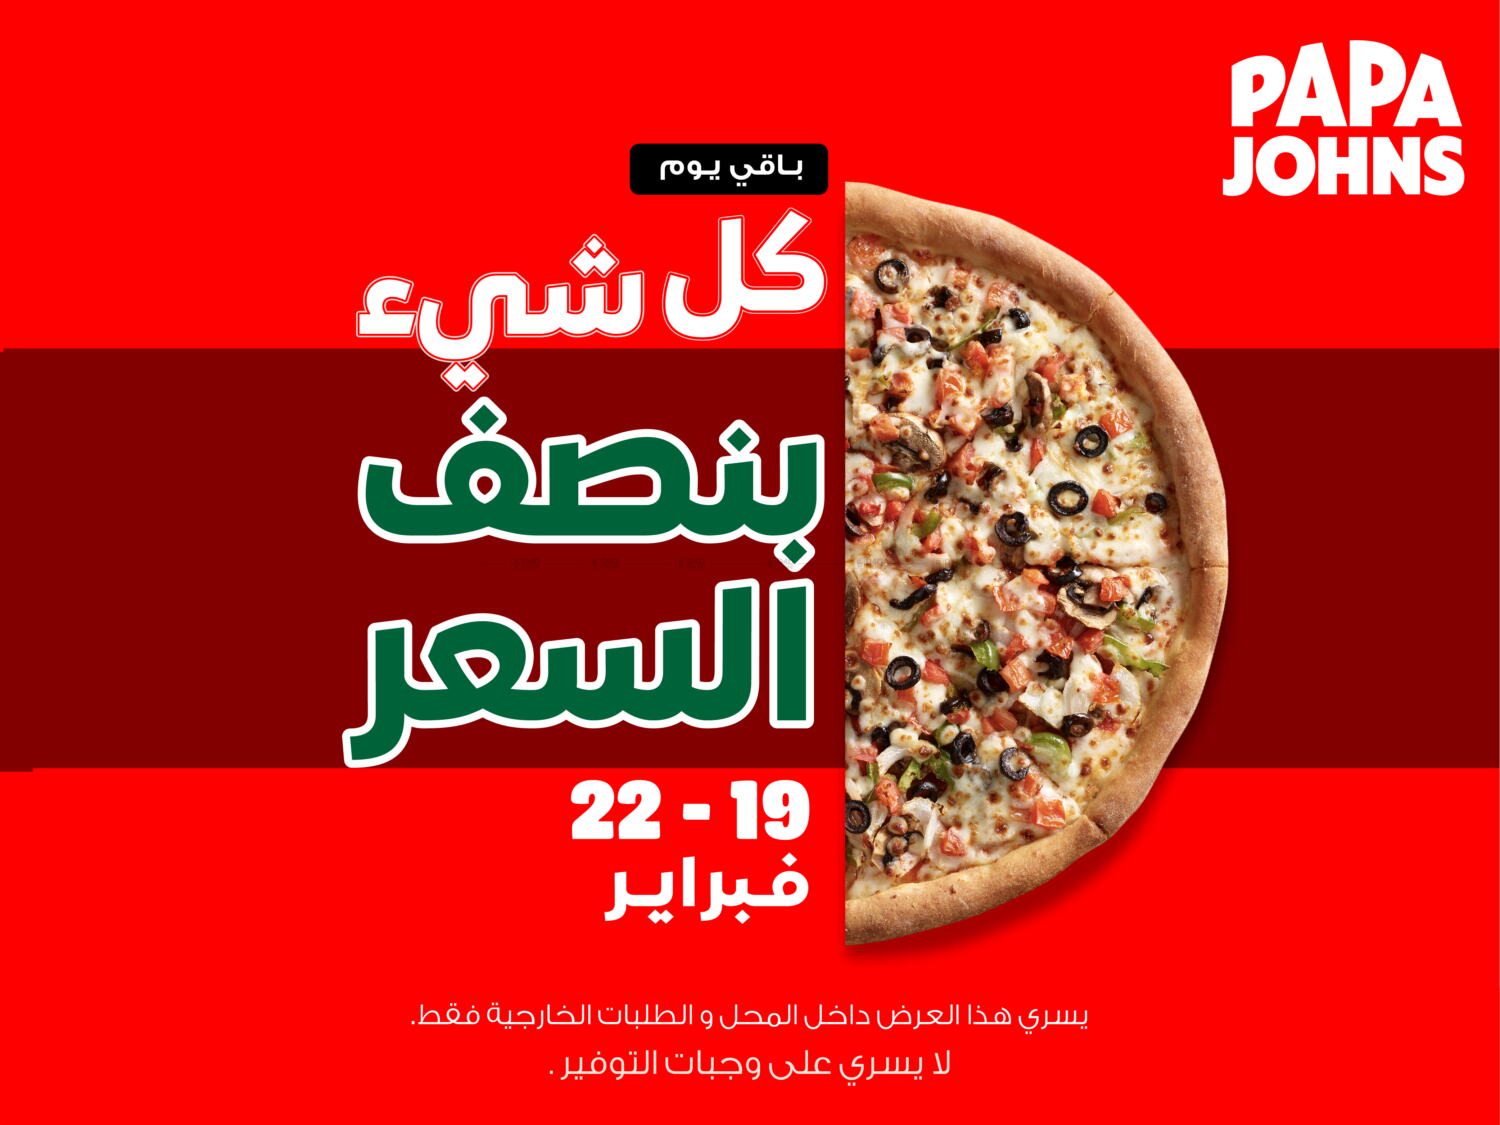 Papa Johns Pizza - Bahrain